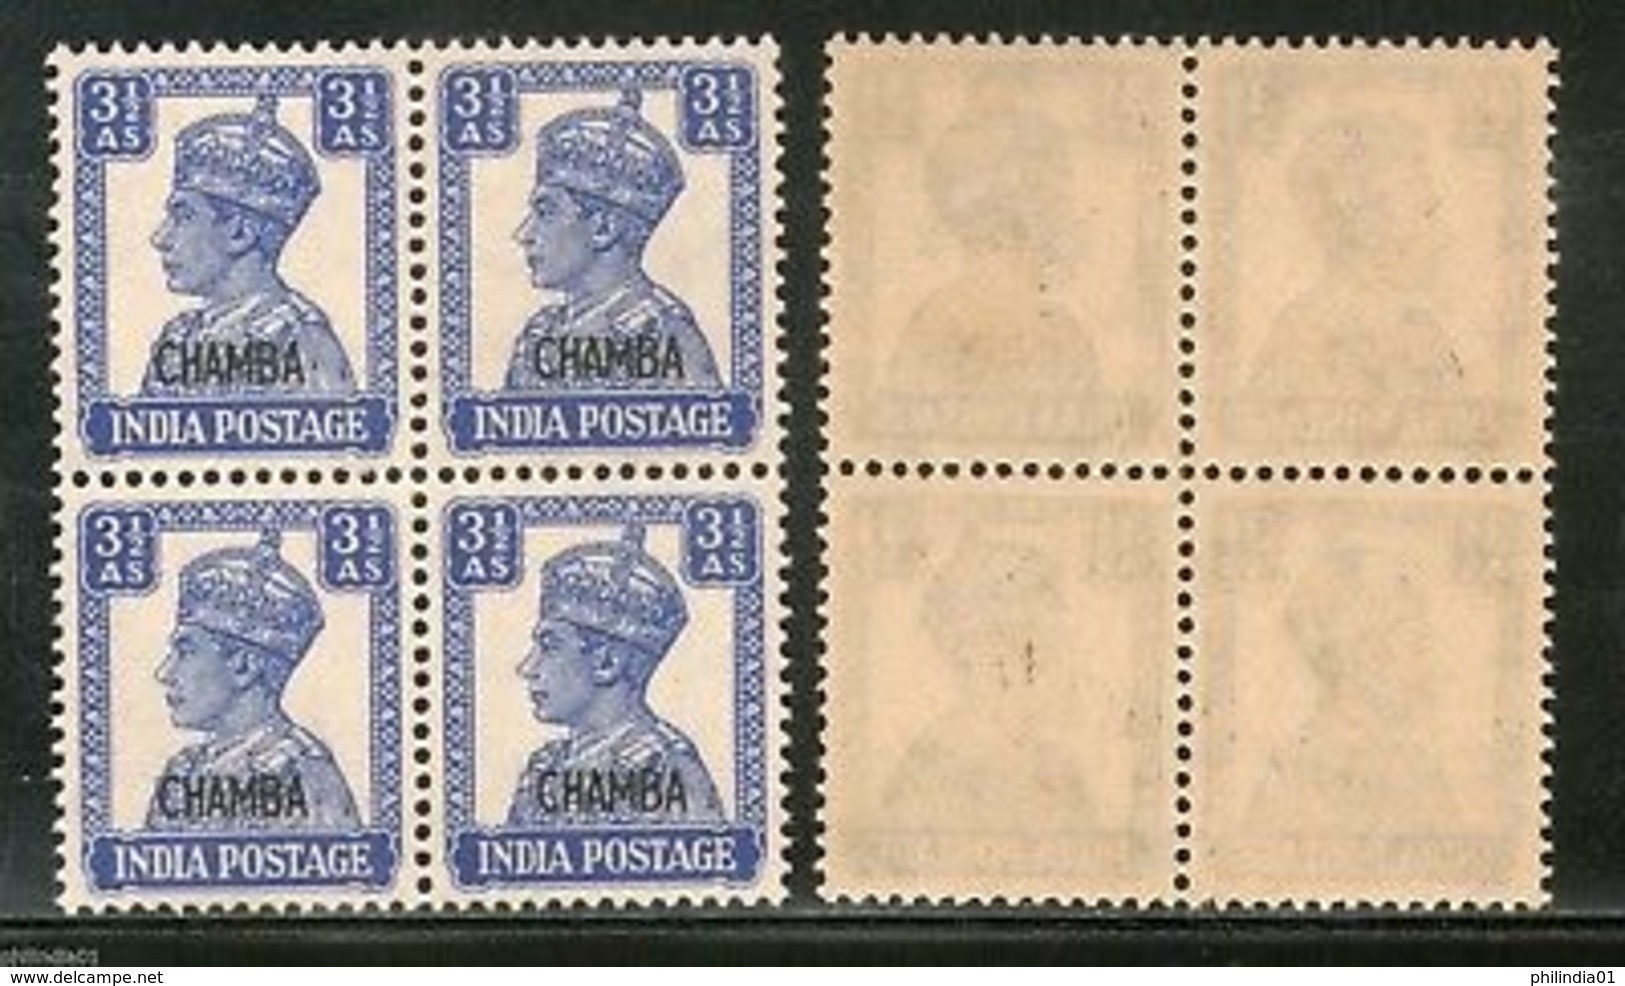 India CHAMBA State 3�As KG VI Postage Stamp SG 115 / Sc 96 BLK/4 Cat. �56 MNH - Chamba